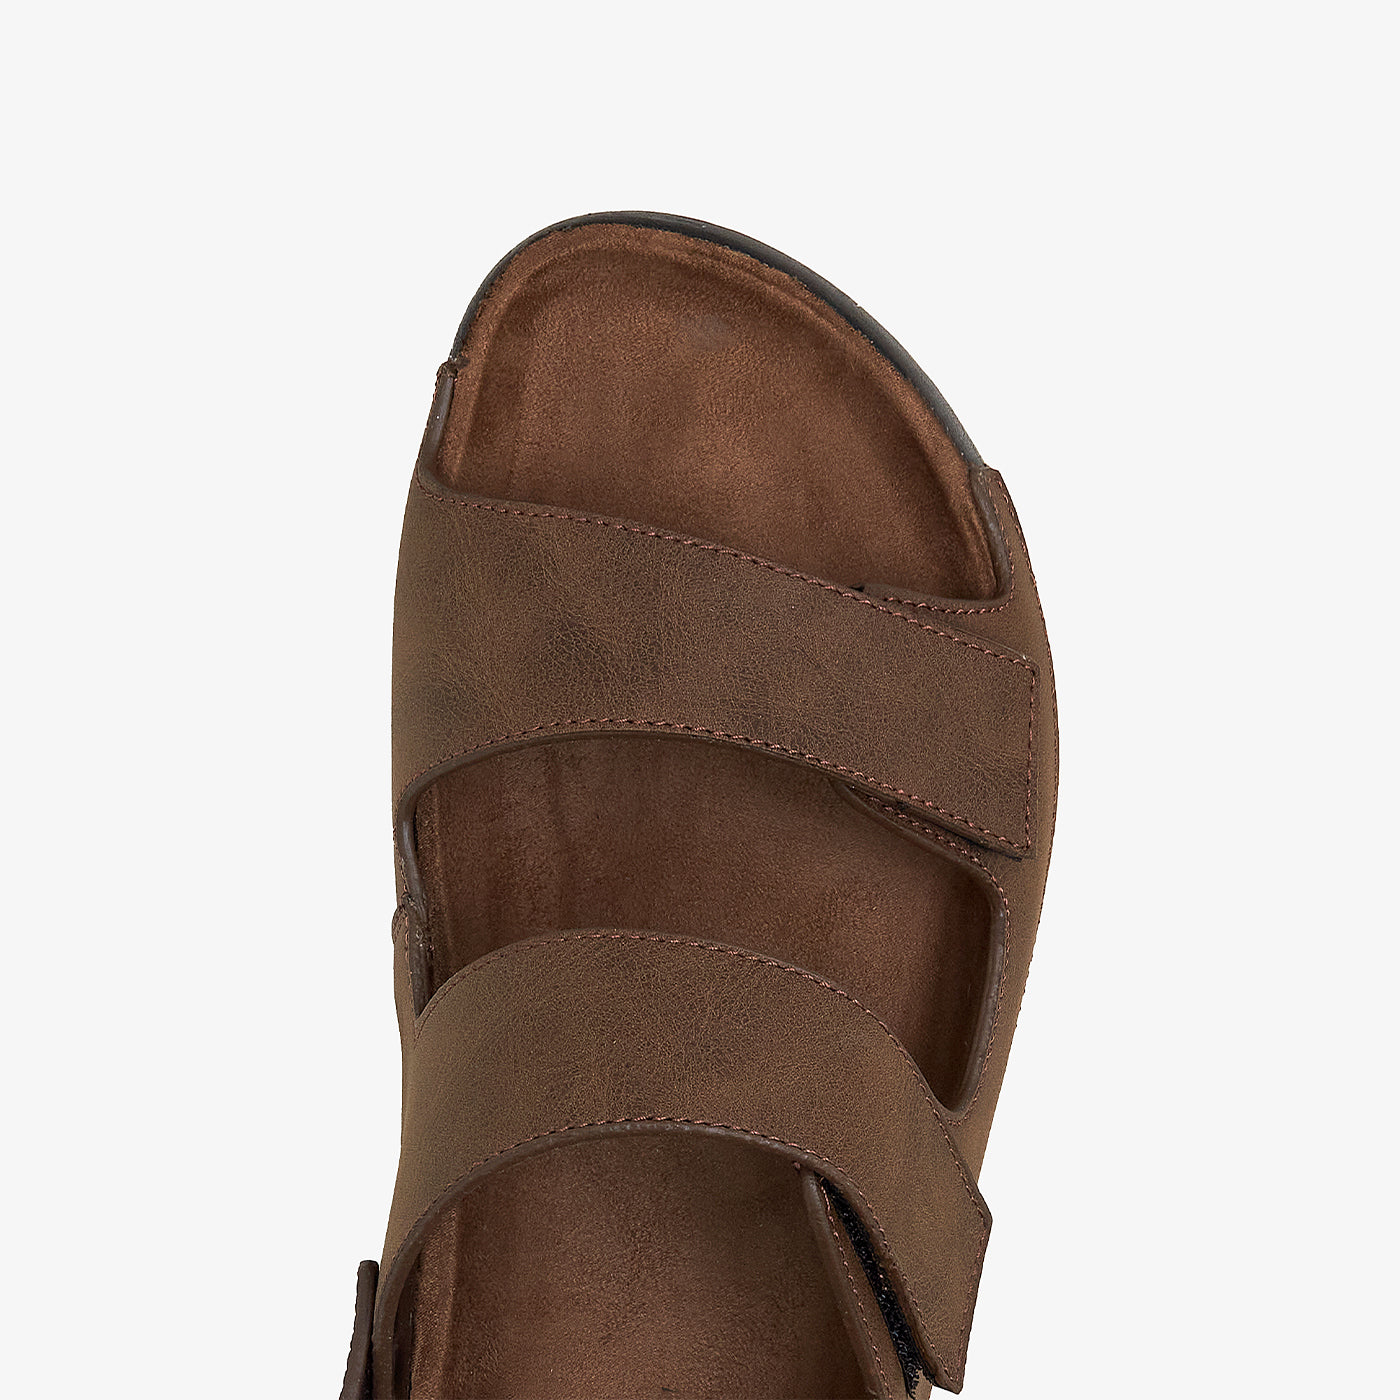 Men's Soft Casual Sandals